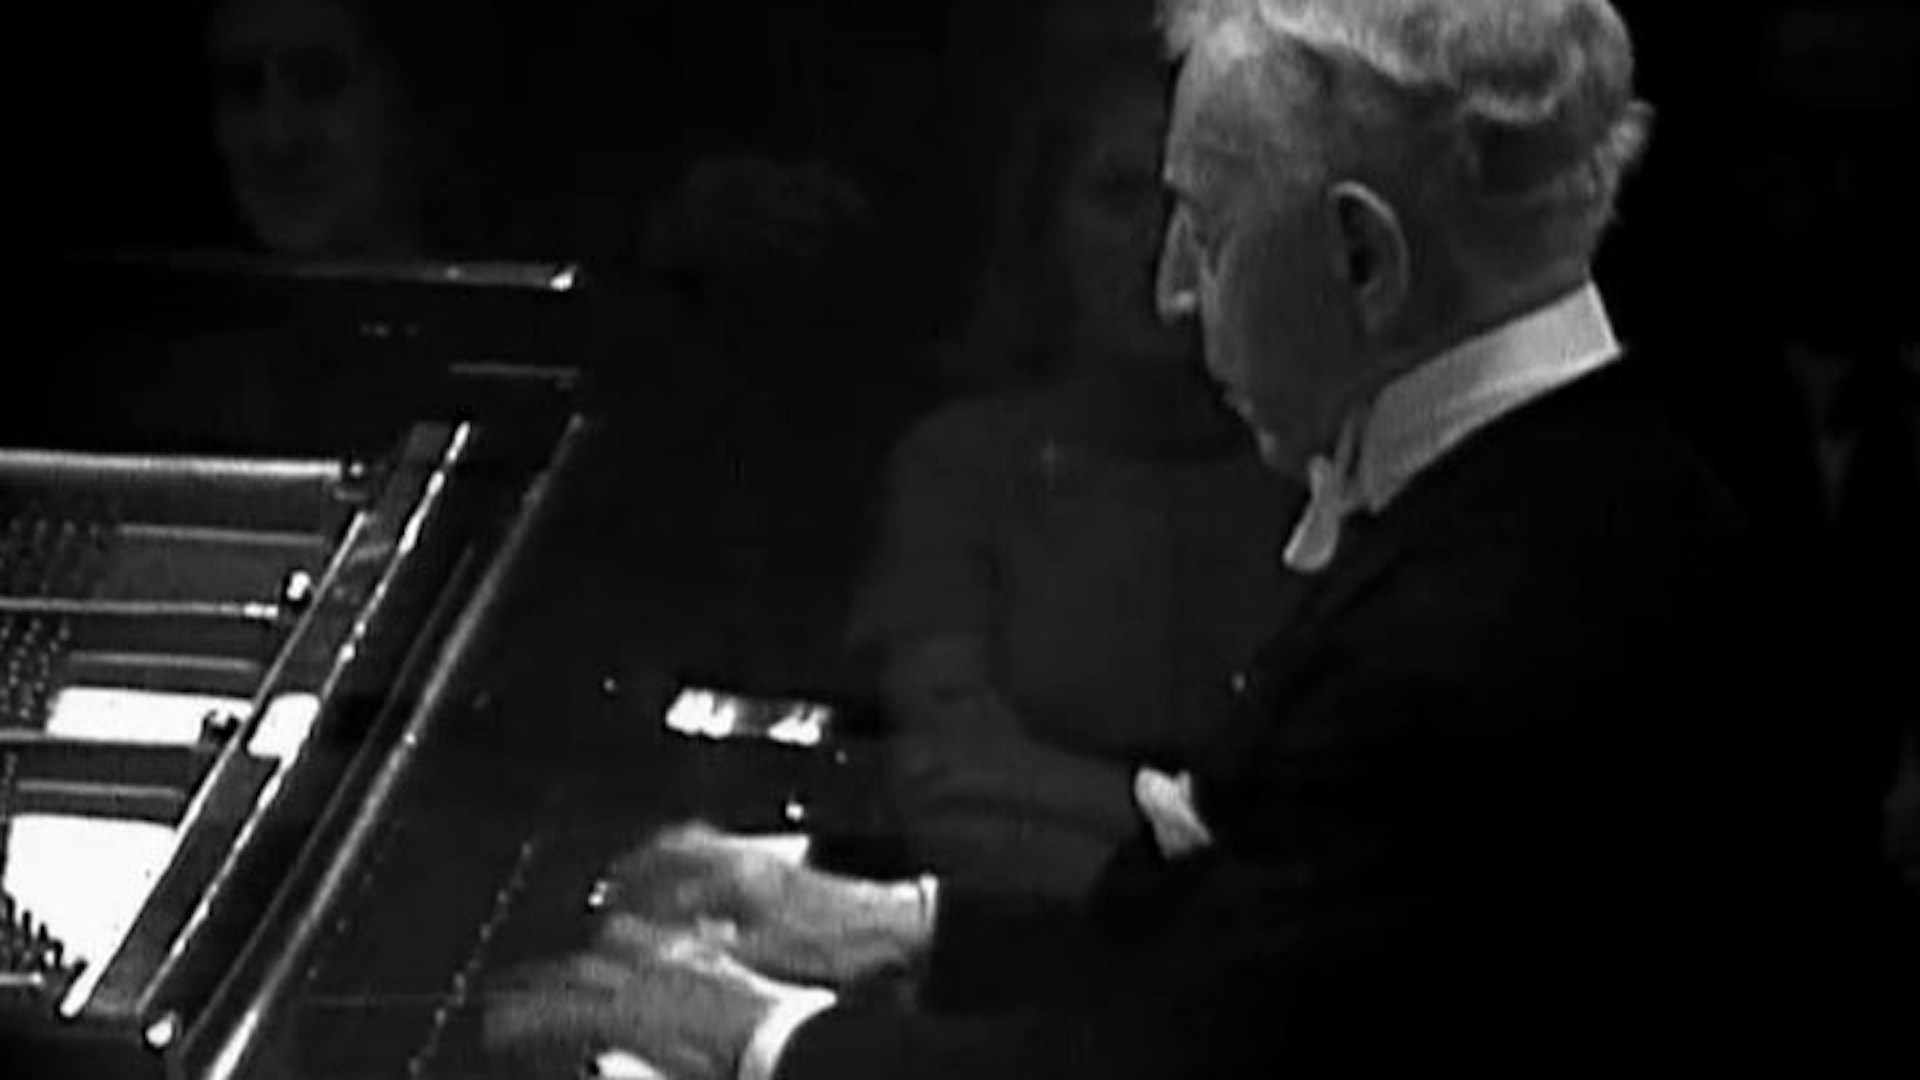 Arthur Rubinstein International Piano Master Competition on medici